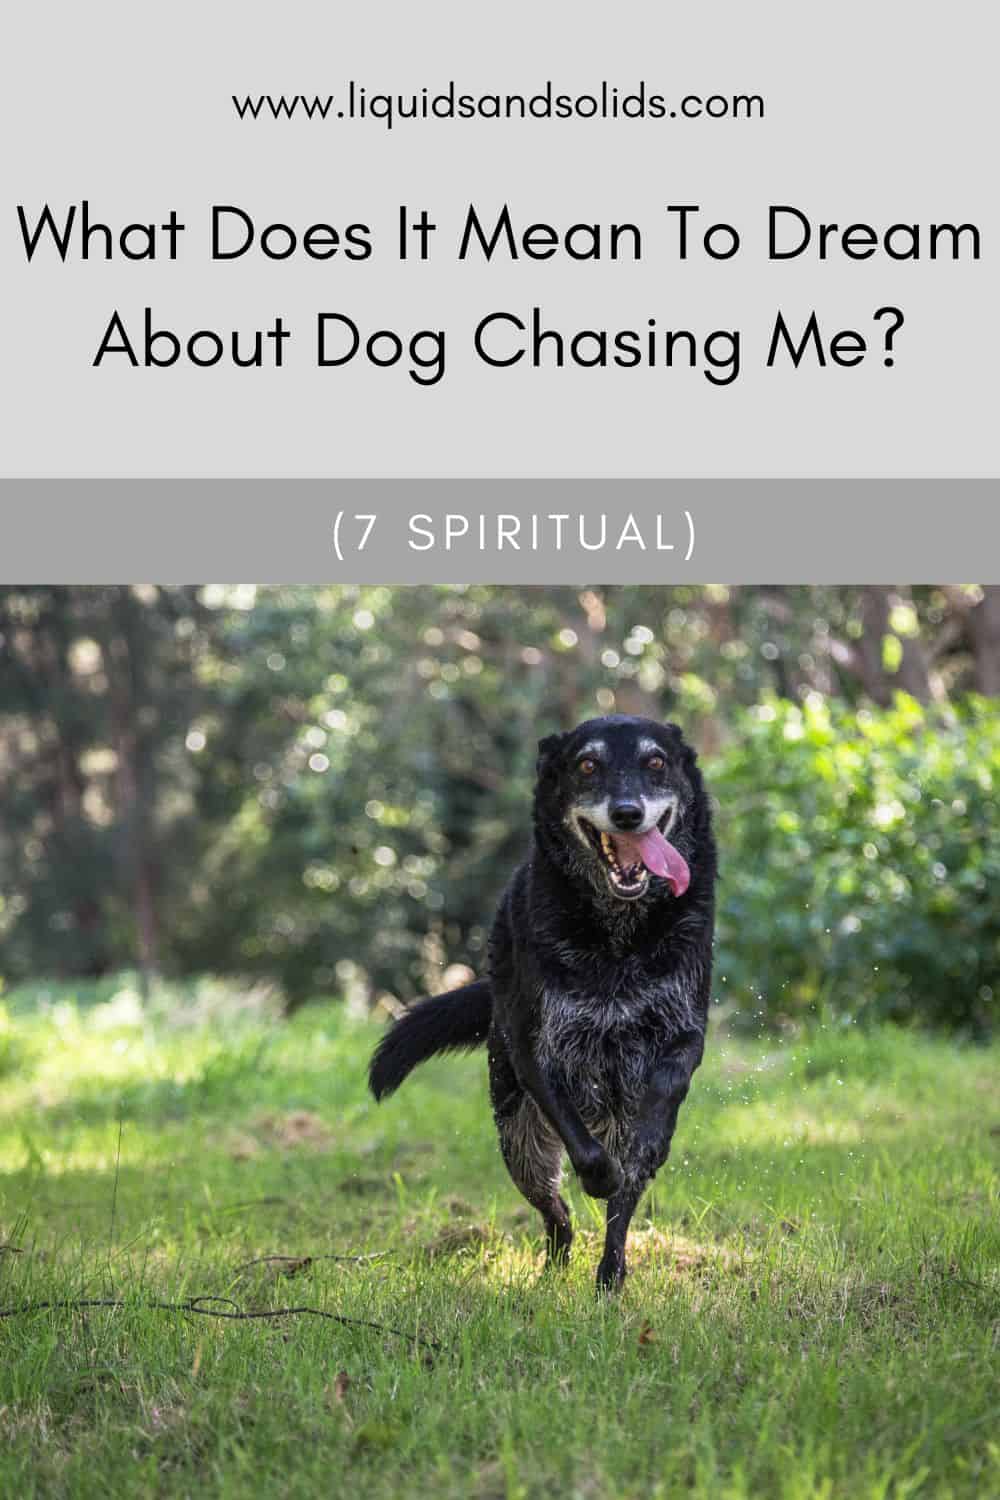  Dream About Dog Chasing Me? (7 vaimset tähendust)